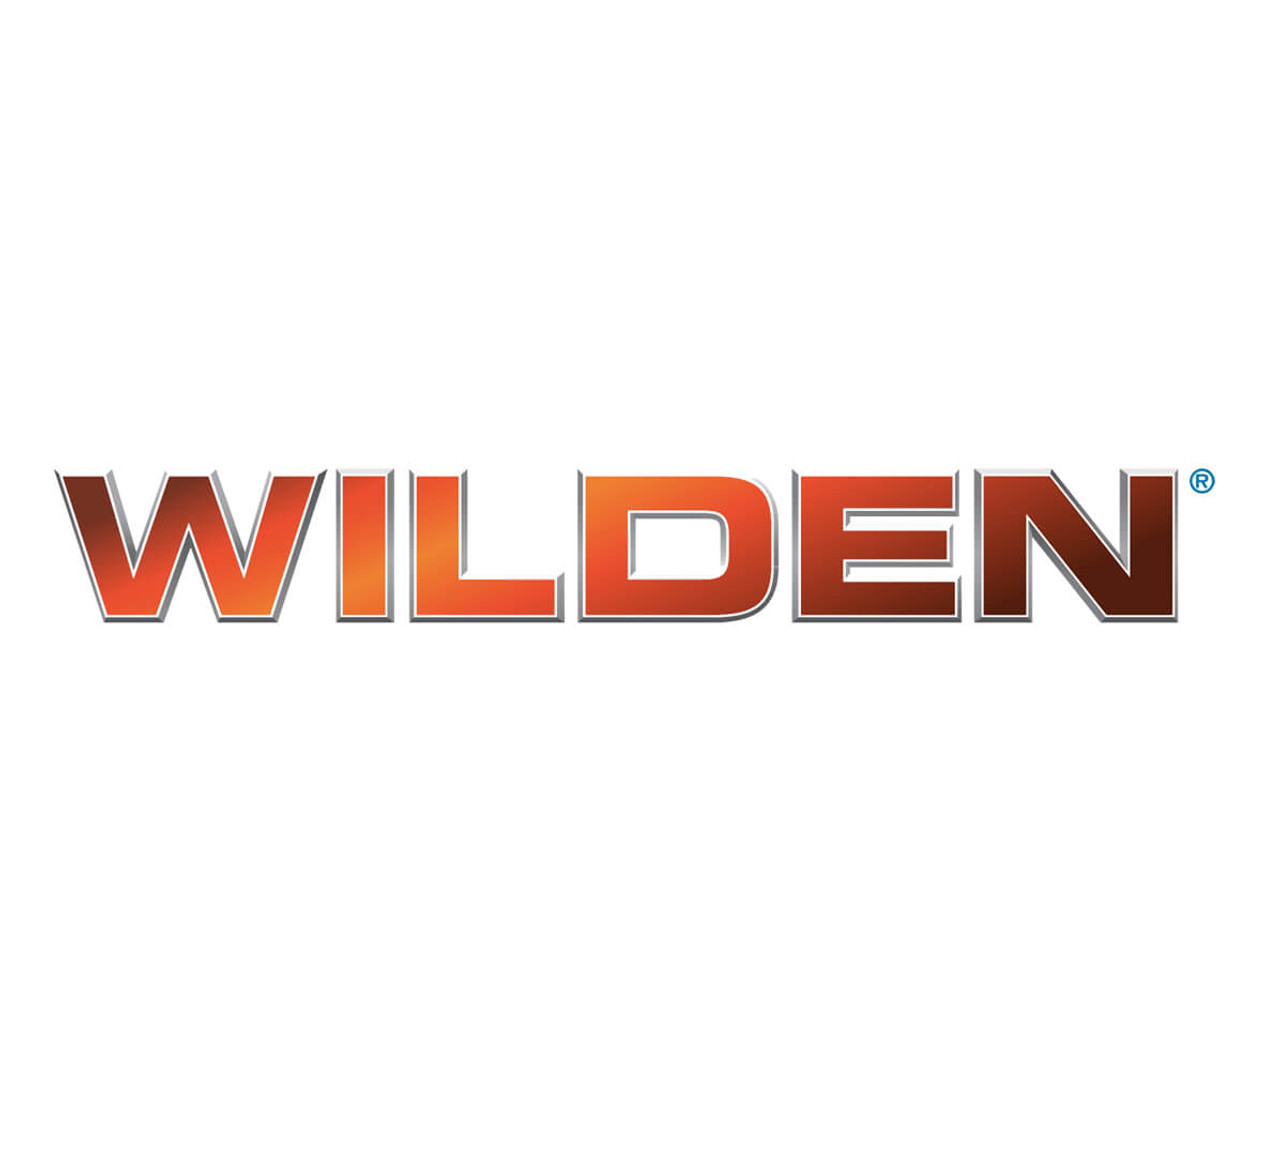 Wilden Wet End Kit 15-9804-58-207